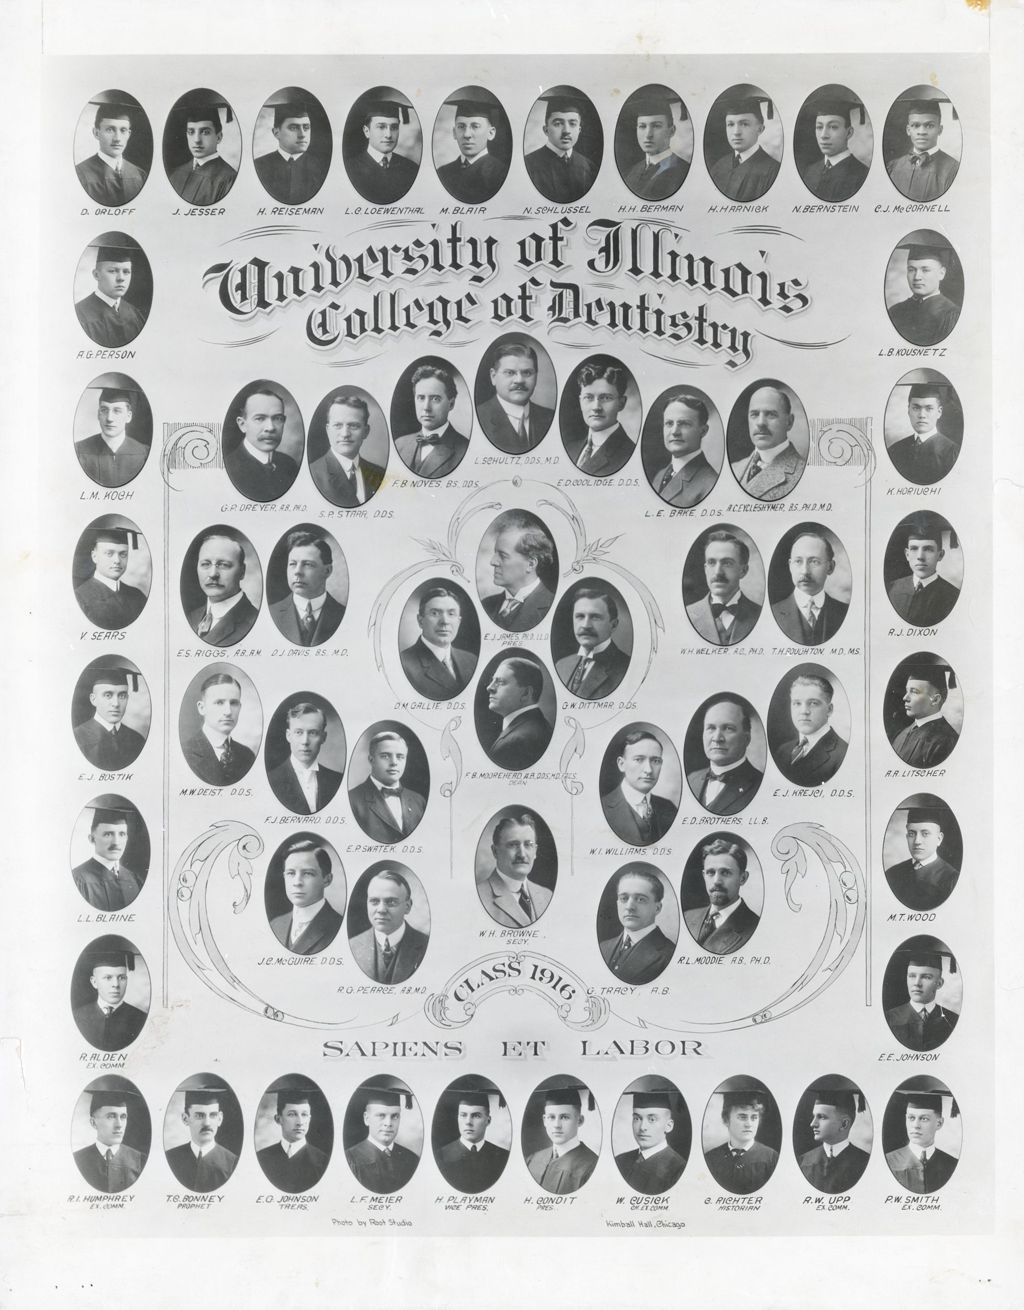 Miniature of 1916 graduating class, University of Illinois College of Dentistry